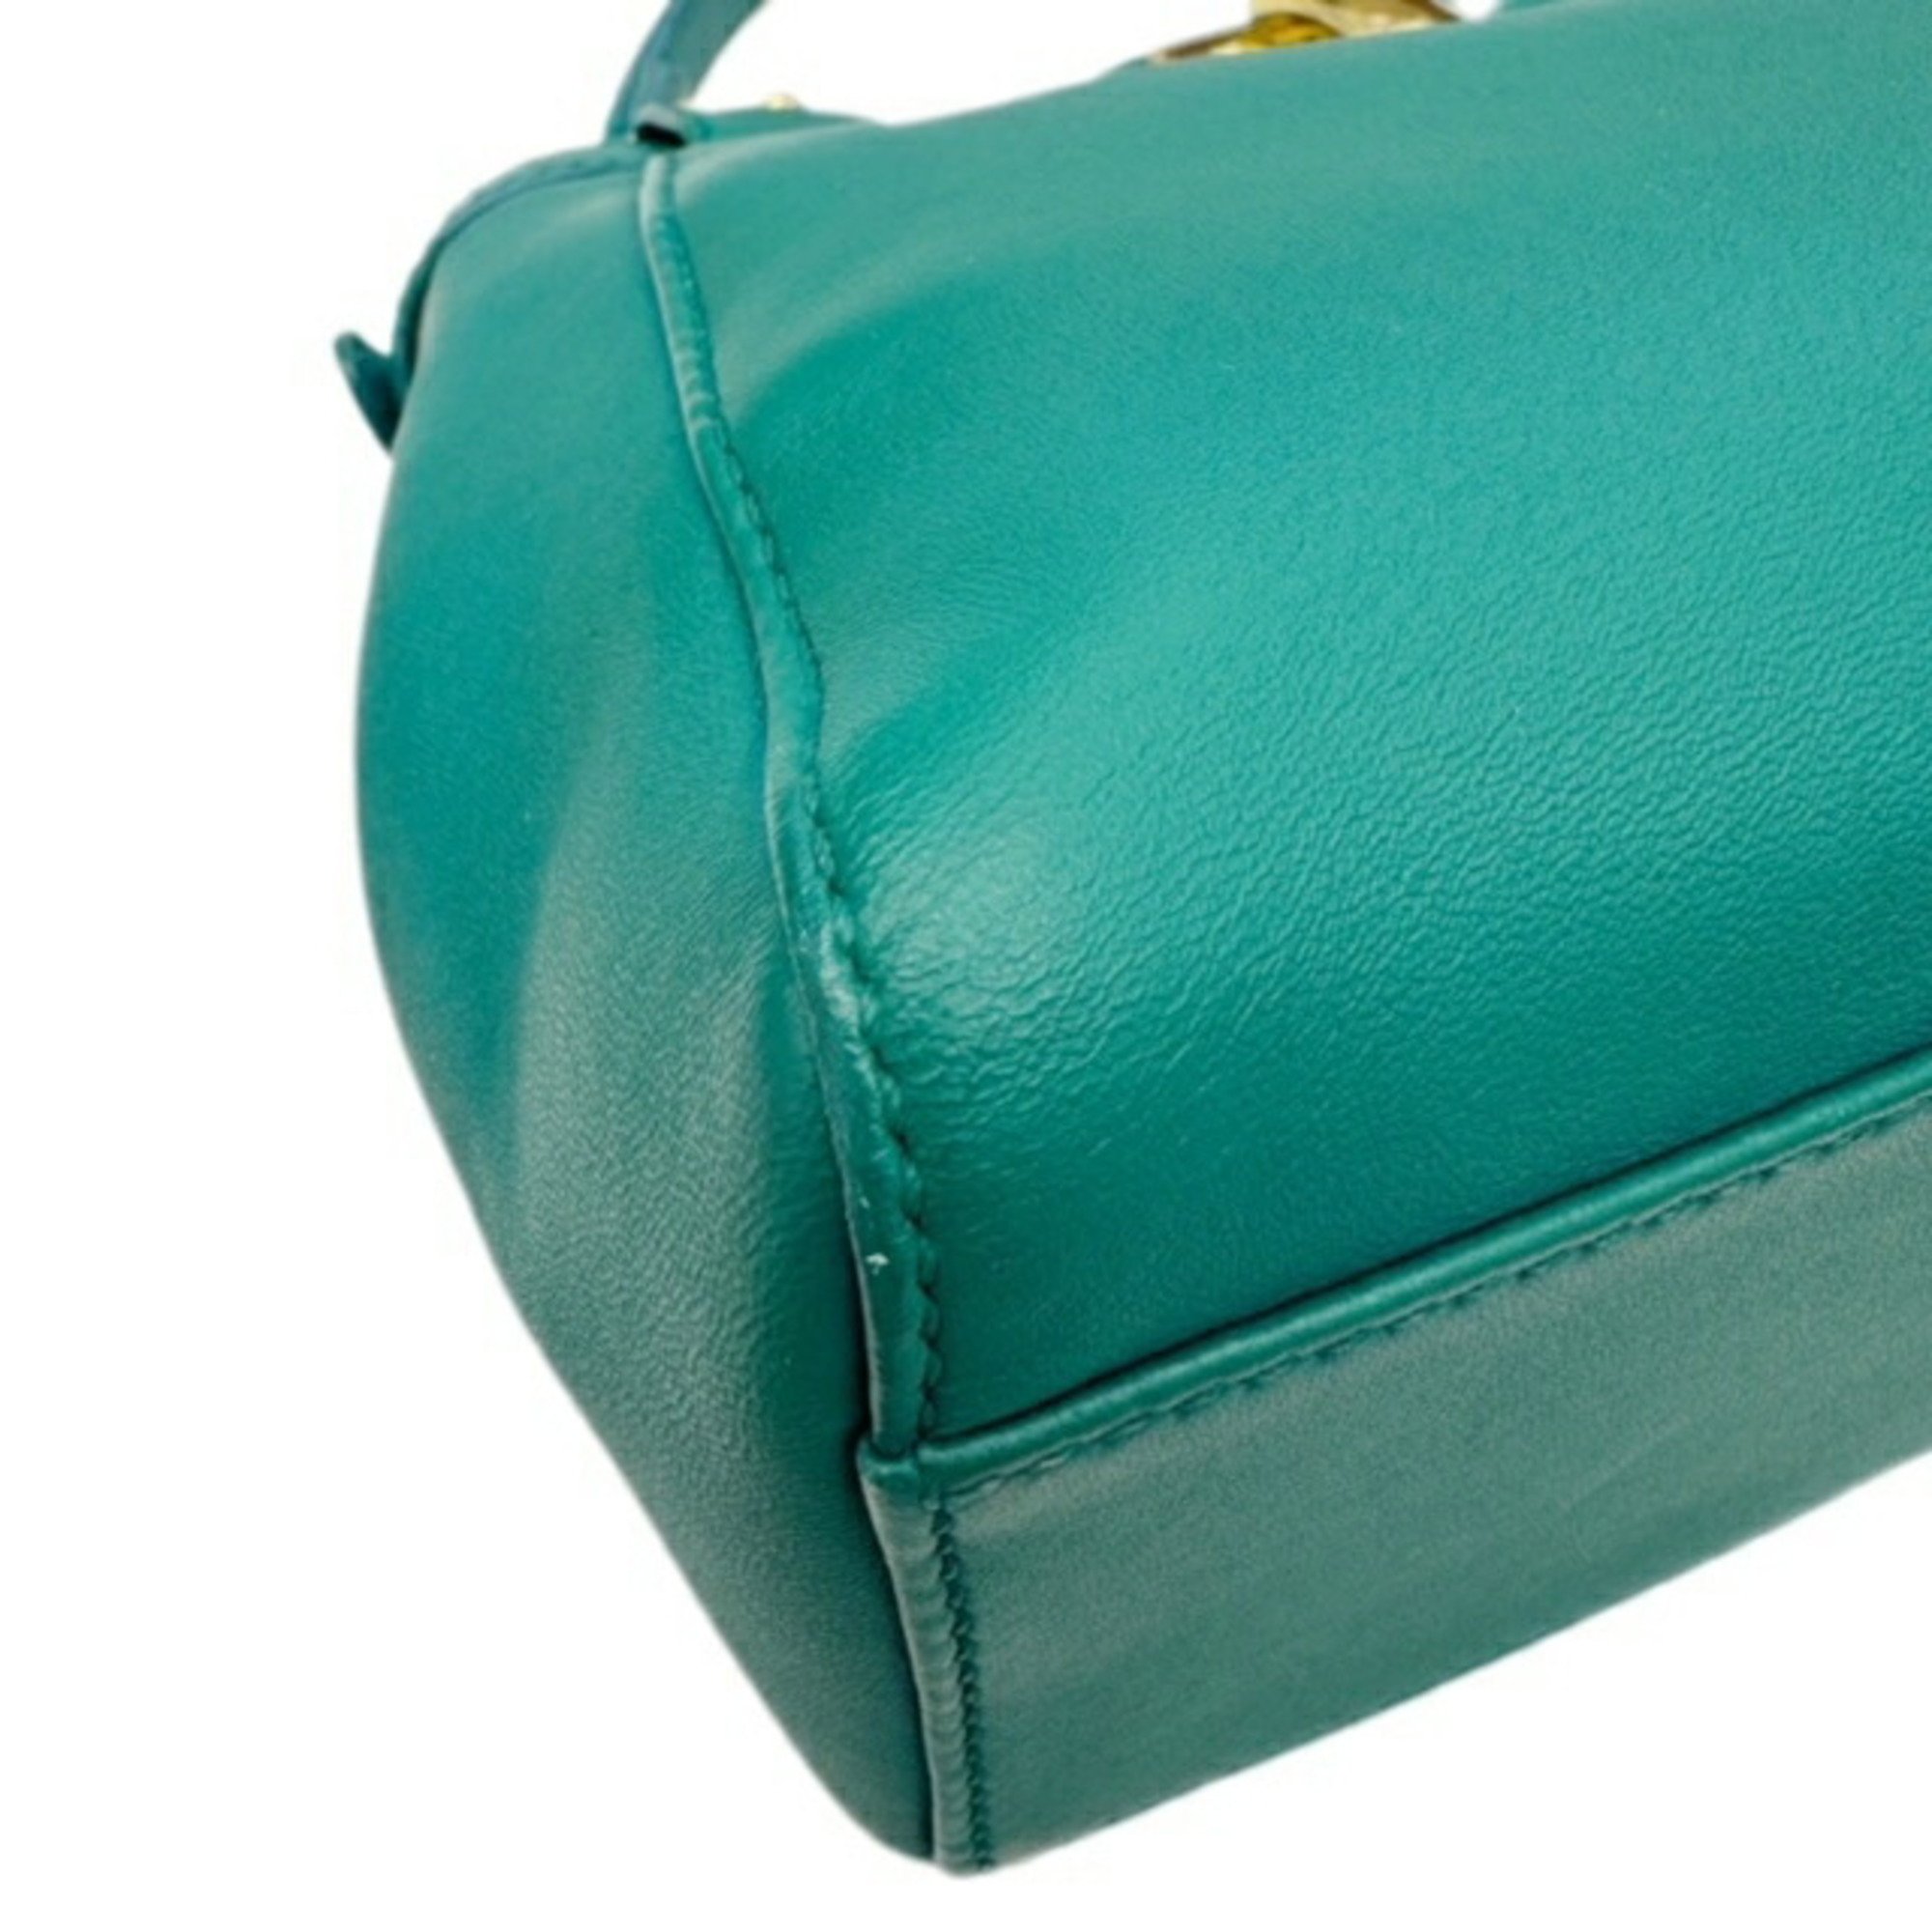 FENDI Peekaboo Leather Green Shoulder Bag Handbag Ladies